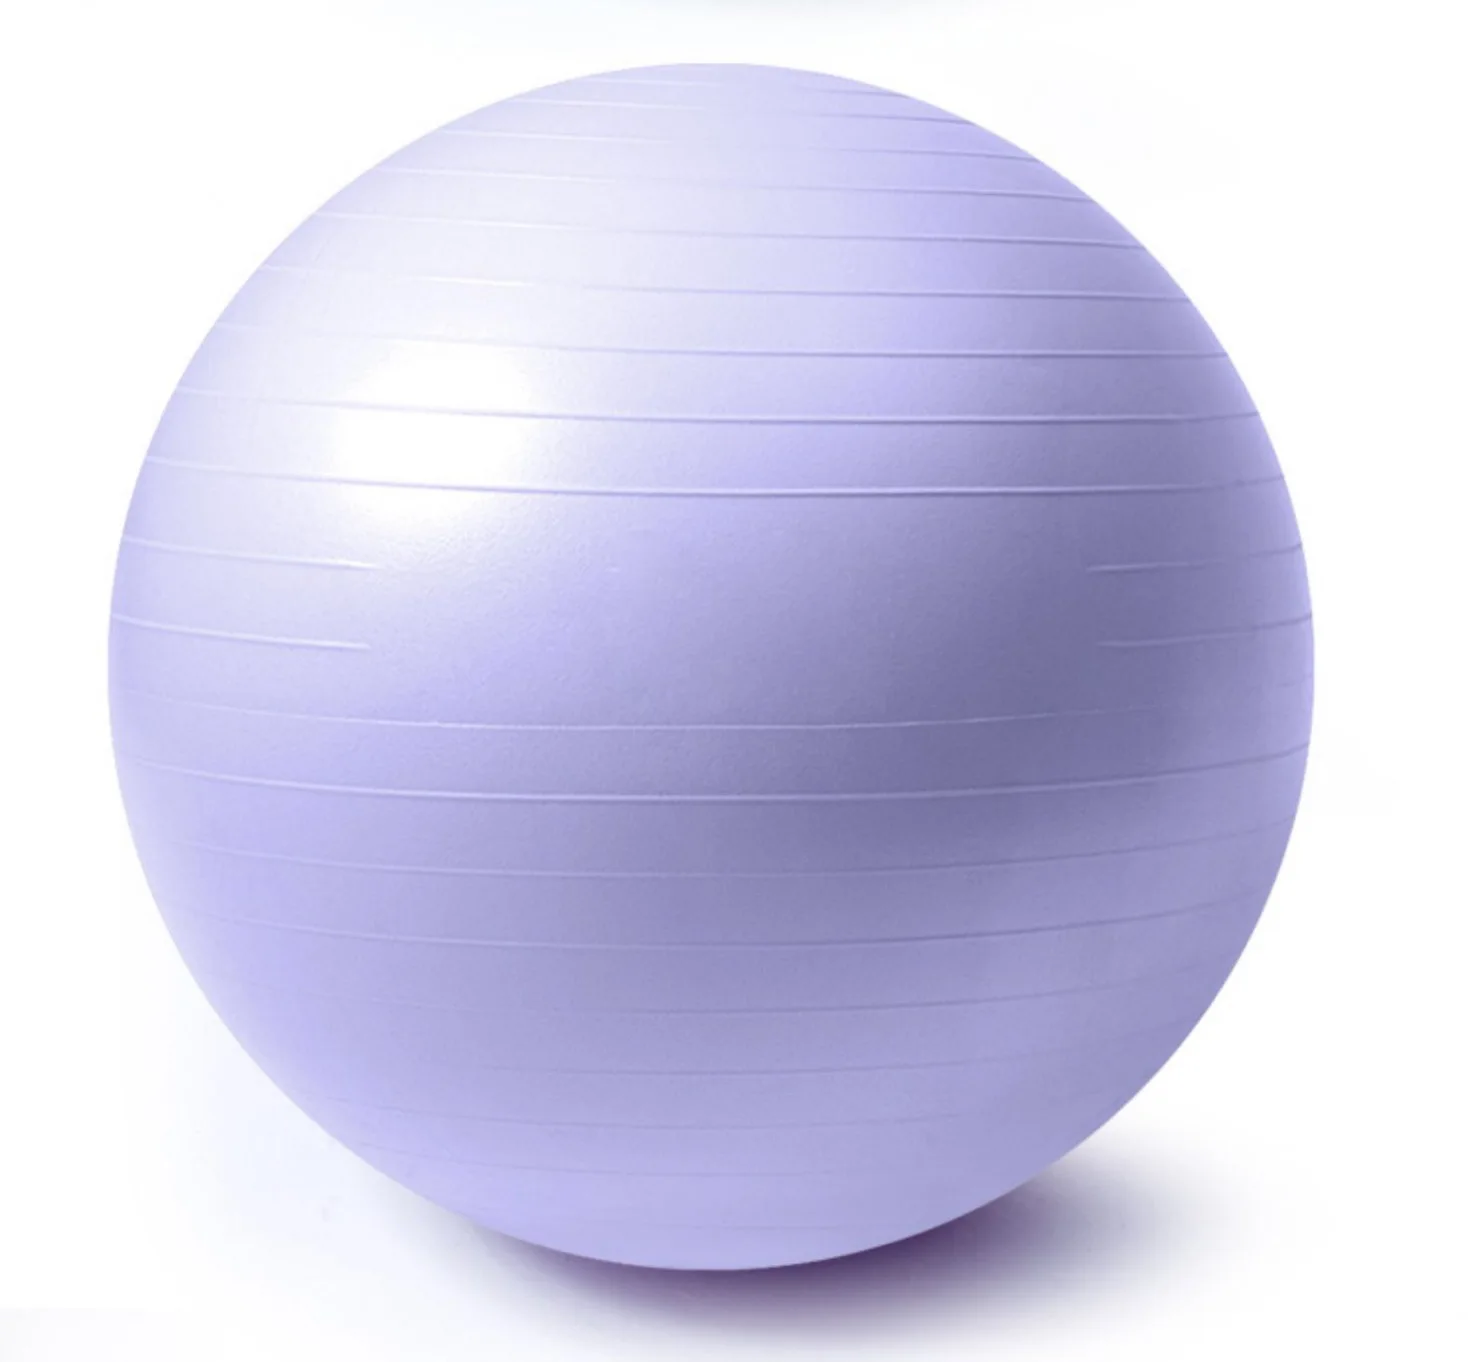 
FULI HOT sale custom message gym ball for home exercise anti-burst yoga fitness ball 